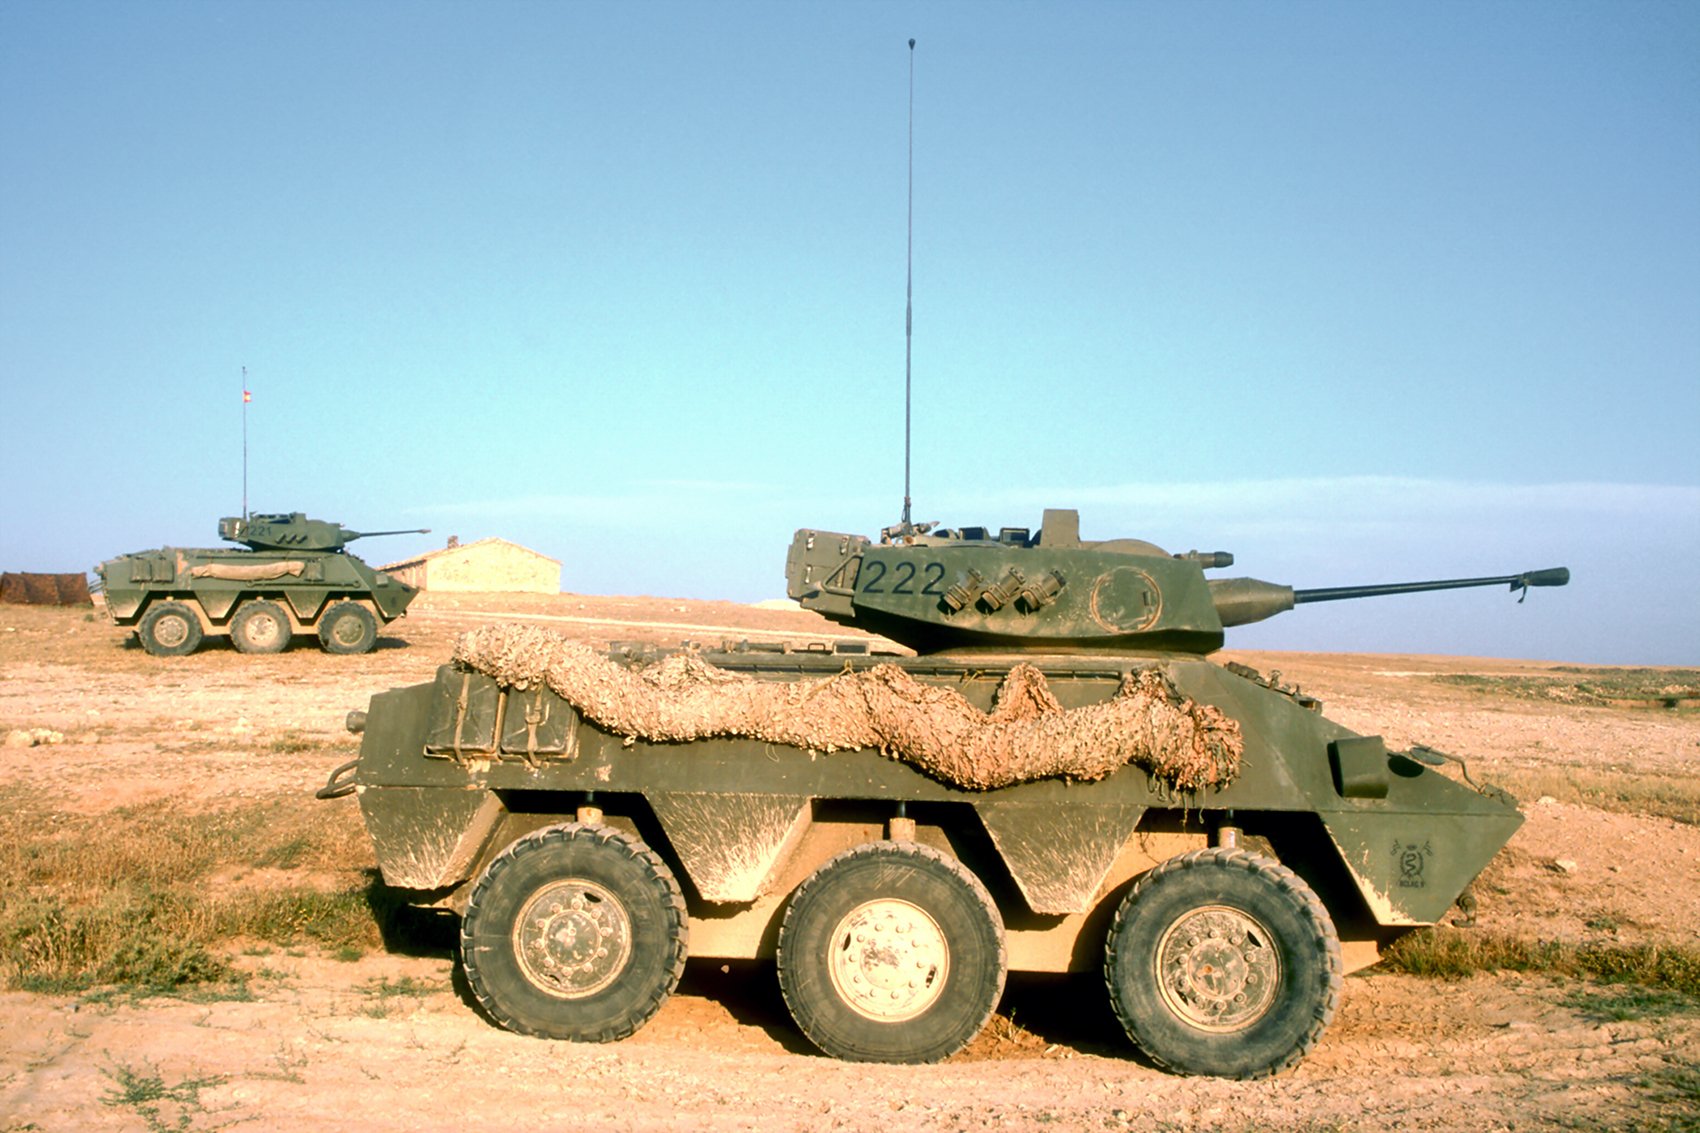 1982, Pegaso, Vec, 3562, Apc, Amphibious, Military, Weapon, Cannon, 6x6, Armored Wallpaper